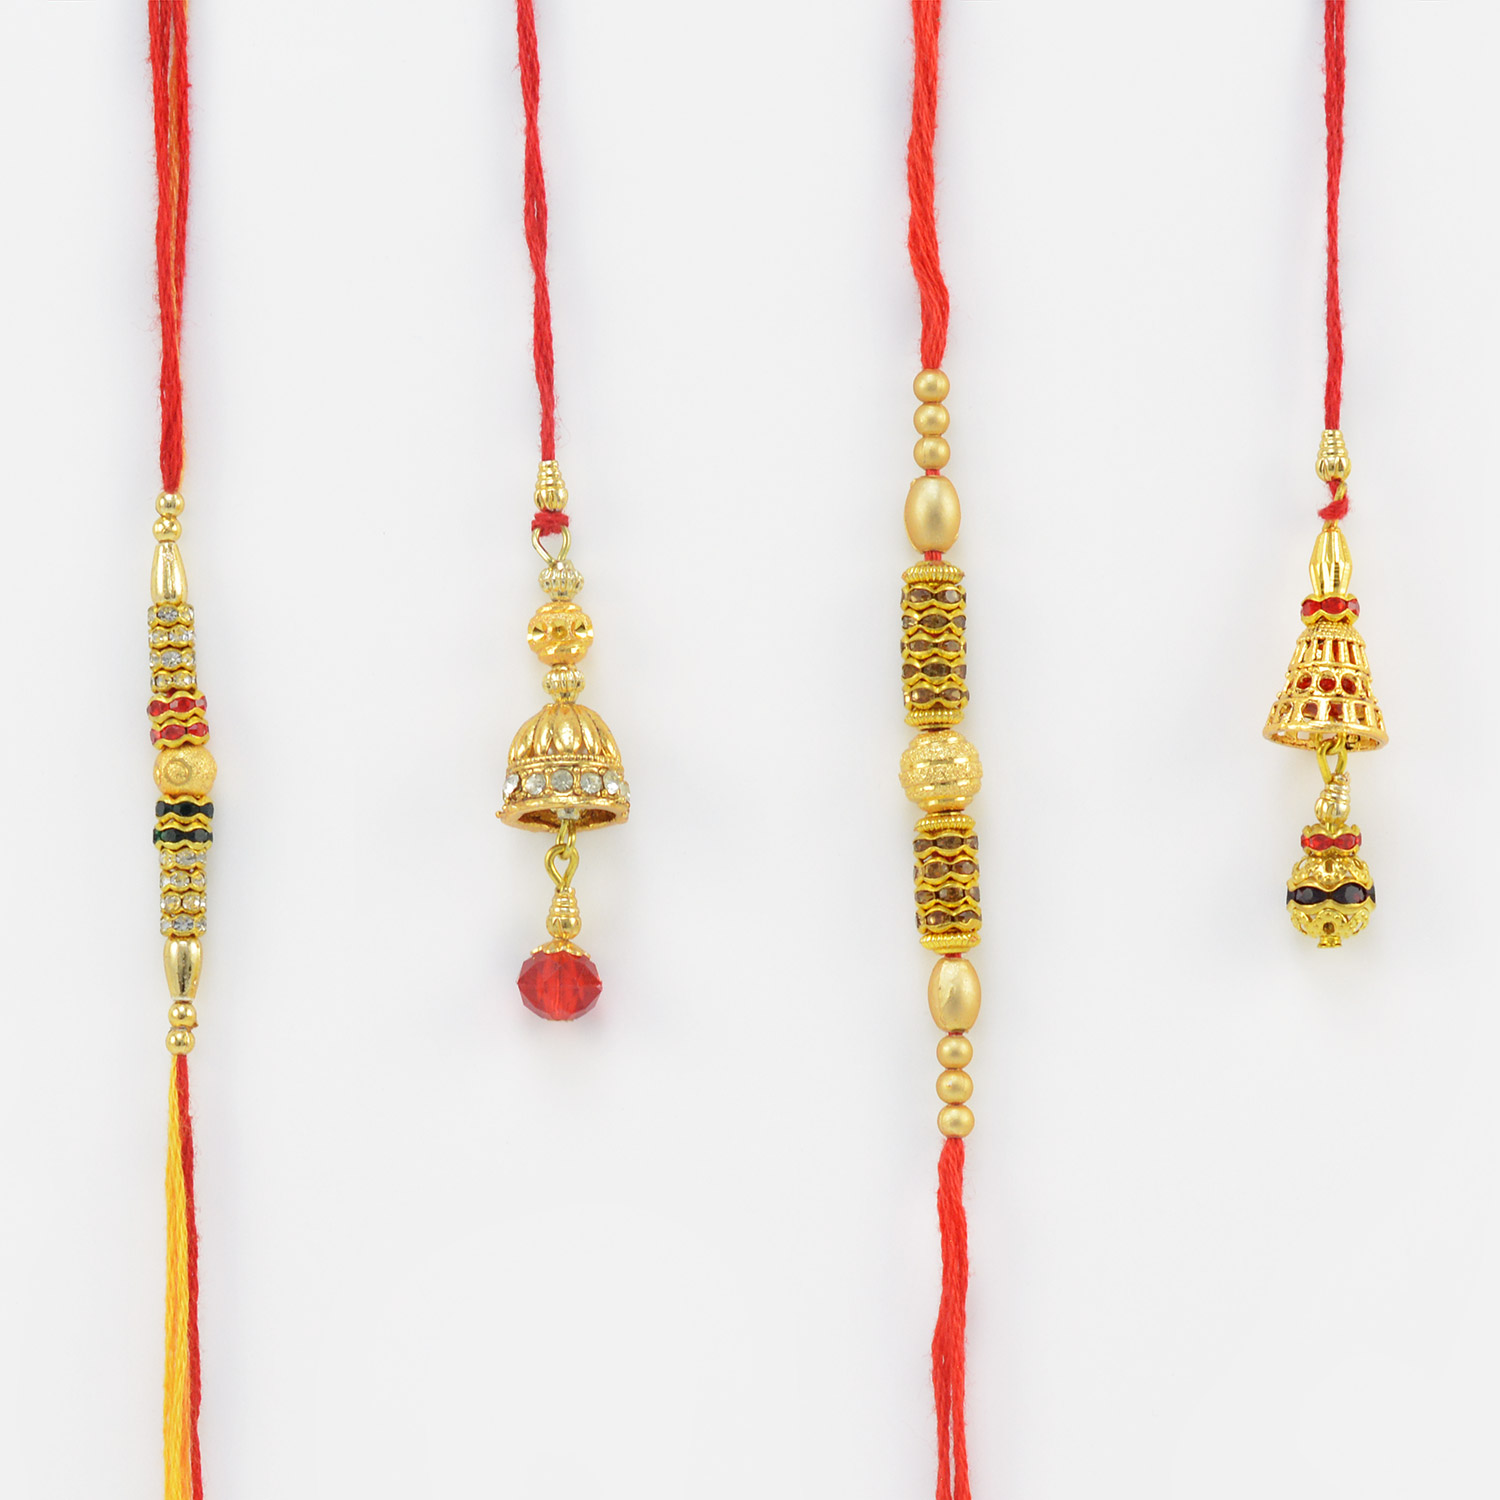 Golden Colore Beads and jewel Rakhi 2 pair of Bhaiya Bhabhi Rakhi